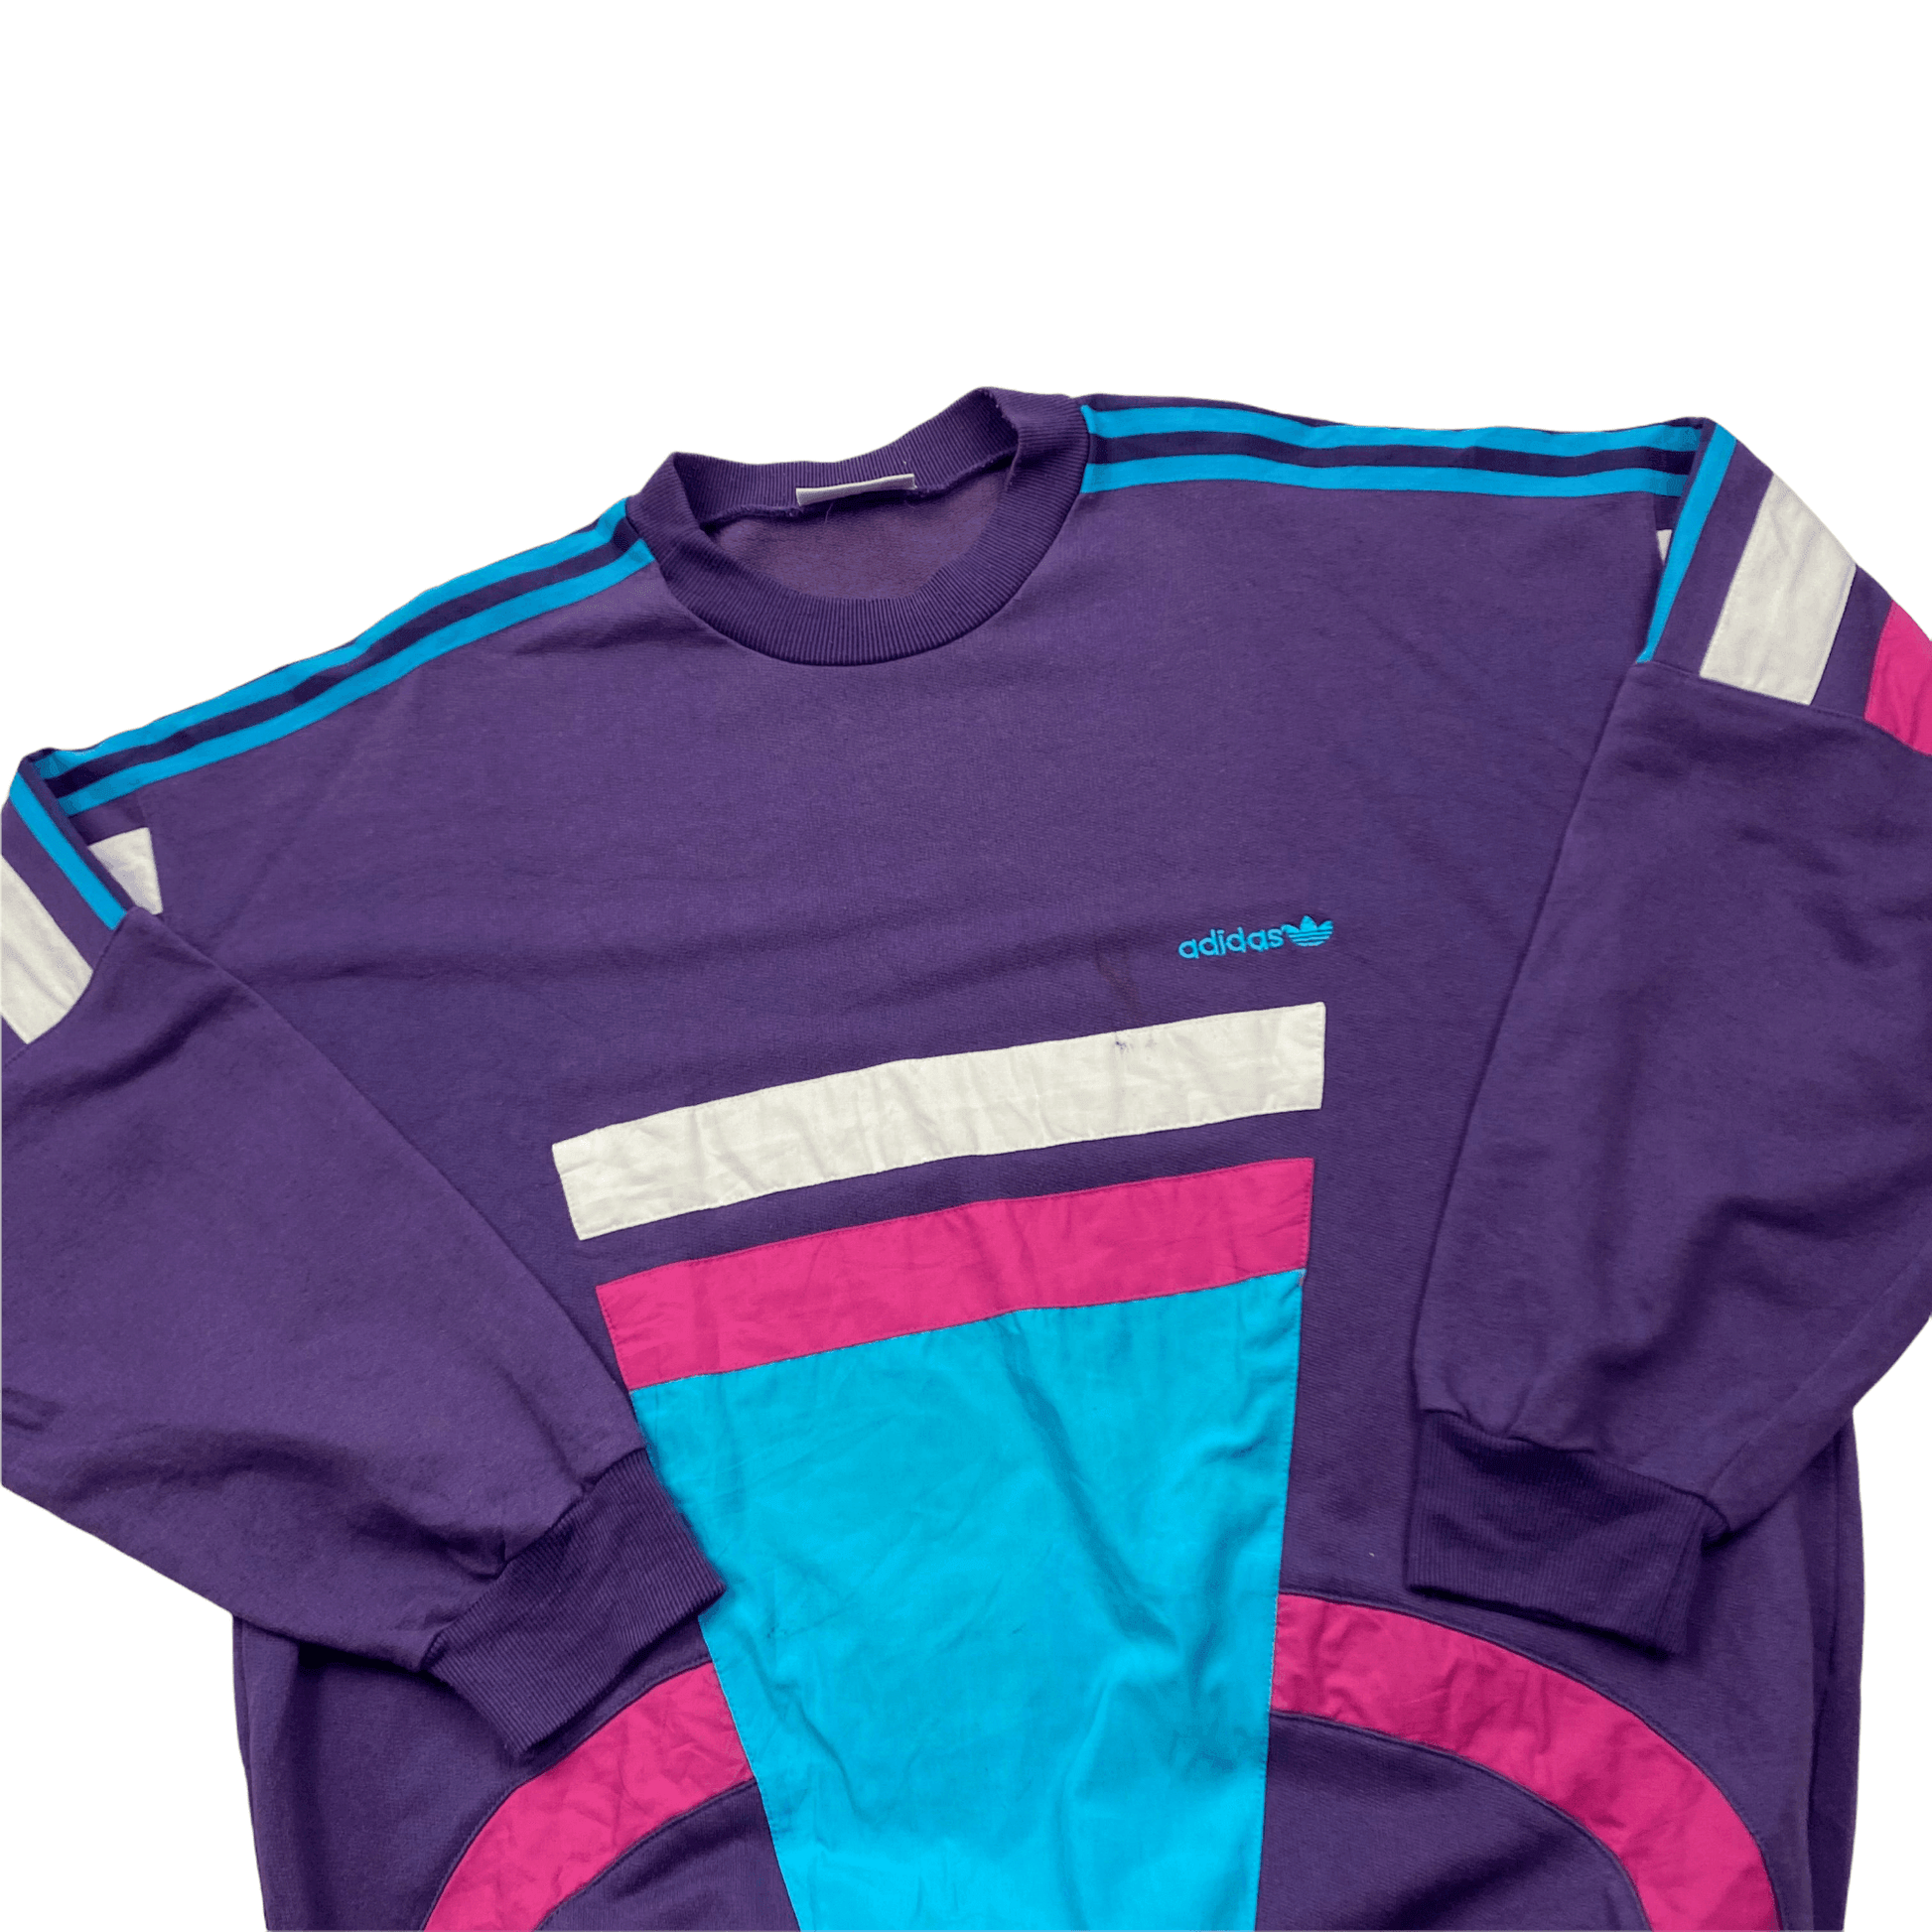 Vintage 90s Purple, Blue + White Adidas Spell-Out Sweatshirt - Large - The Streetwear Studio